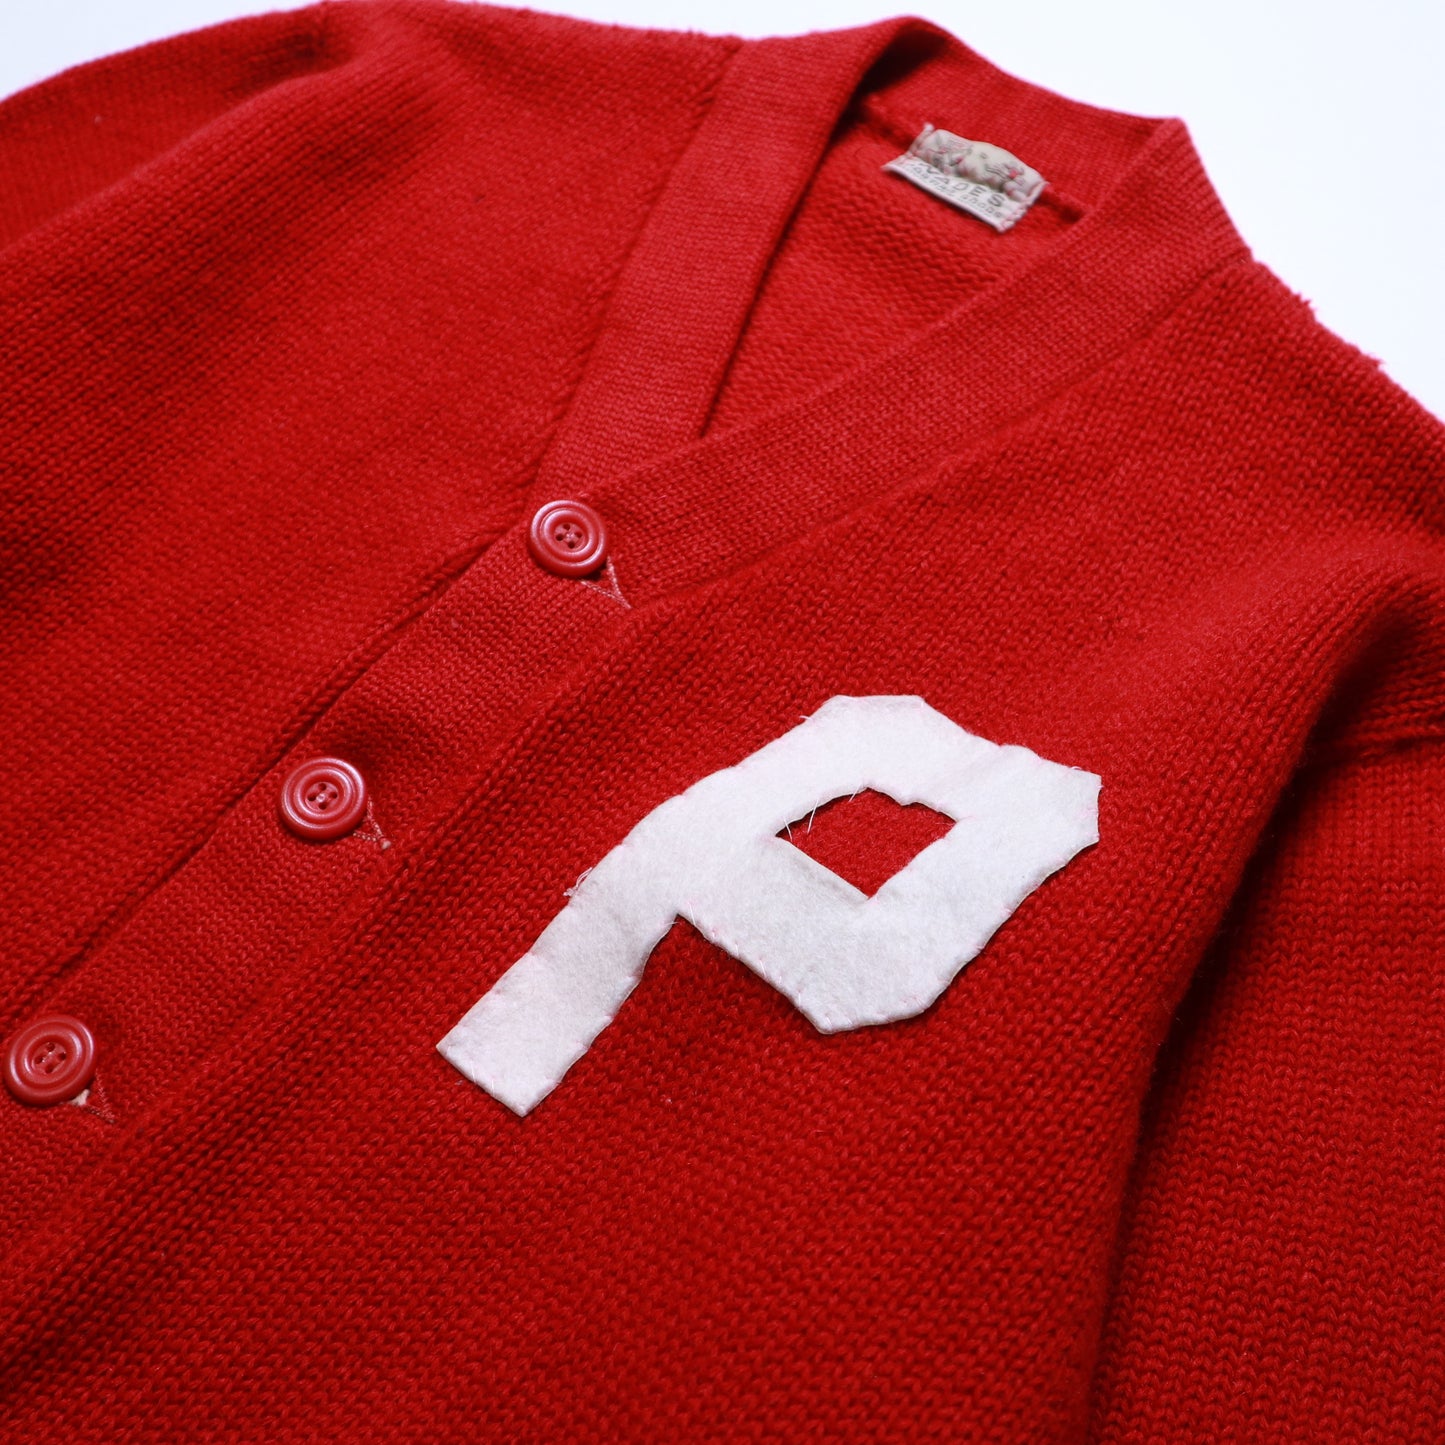 60's Letterman Sweater 紅色針織外套 cardigan